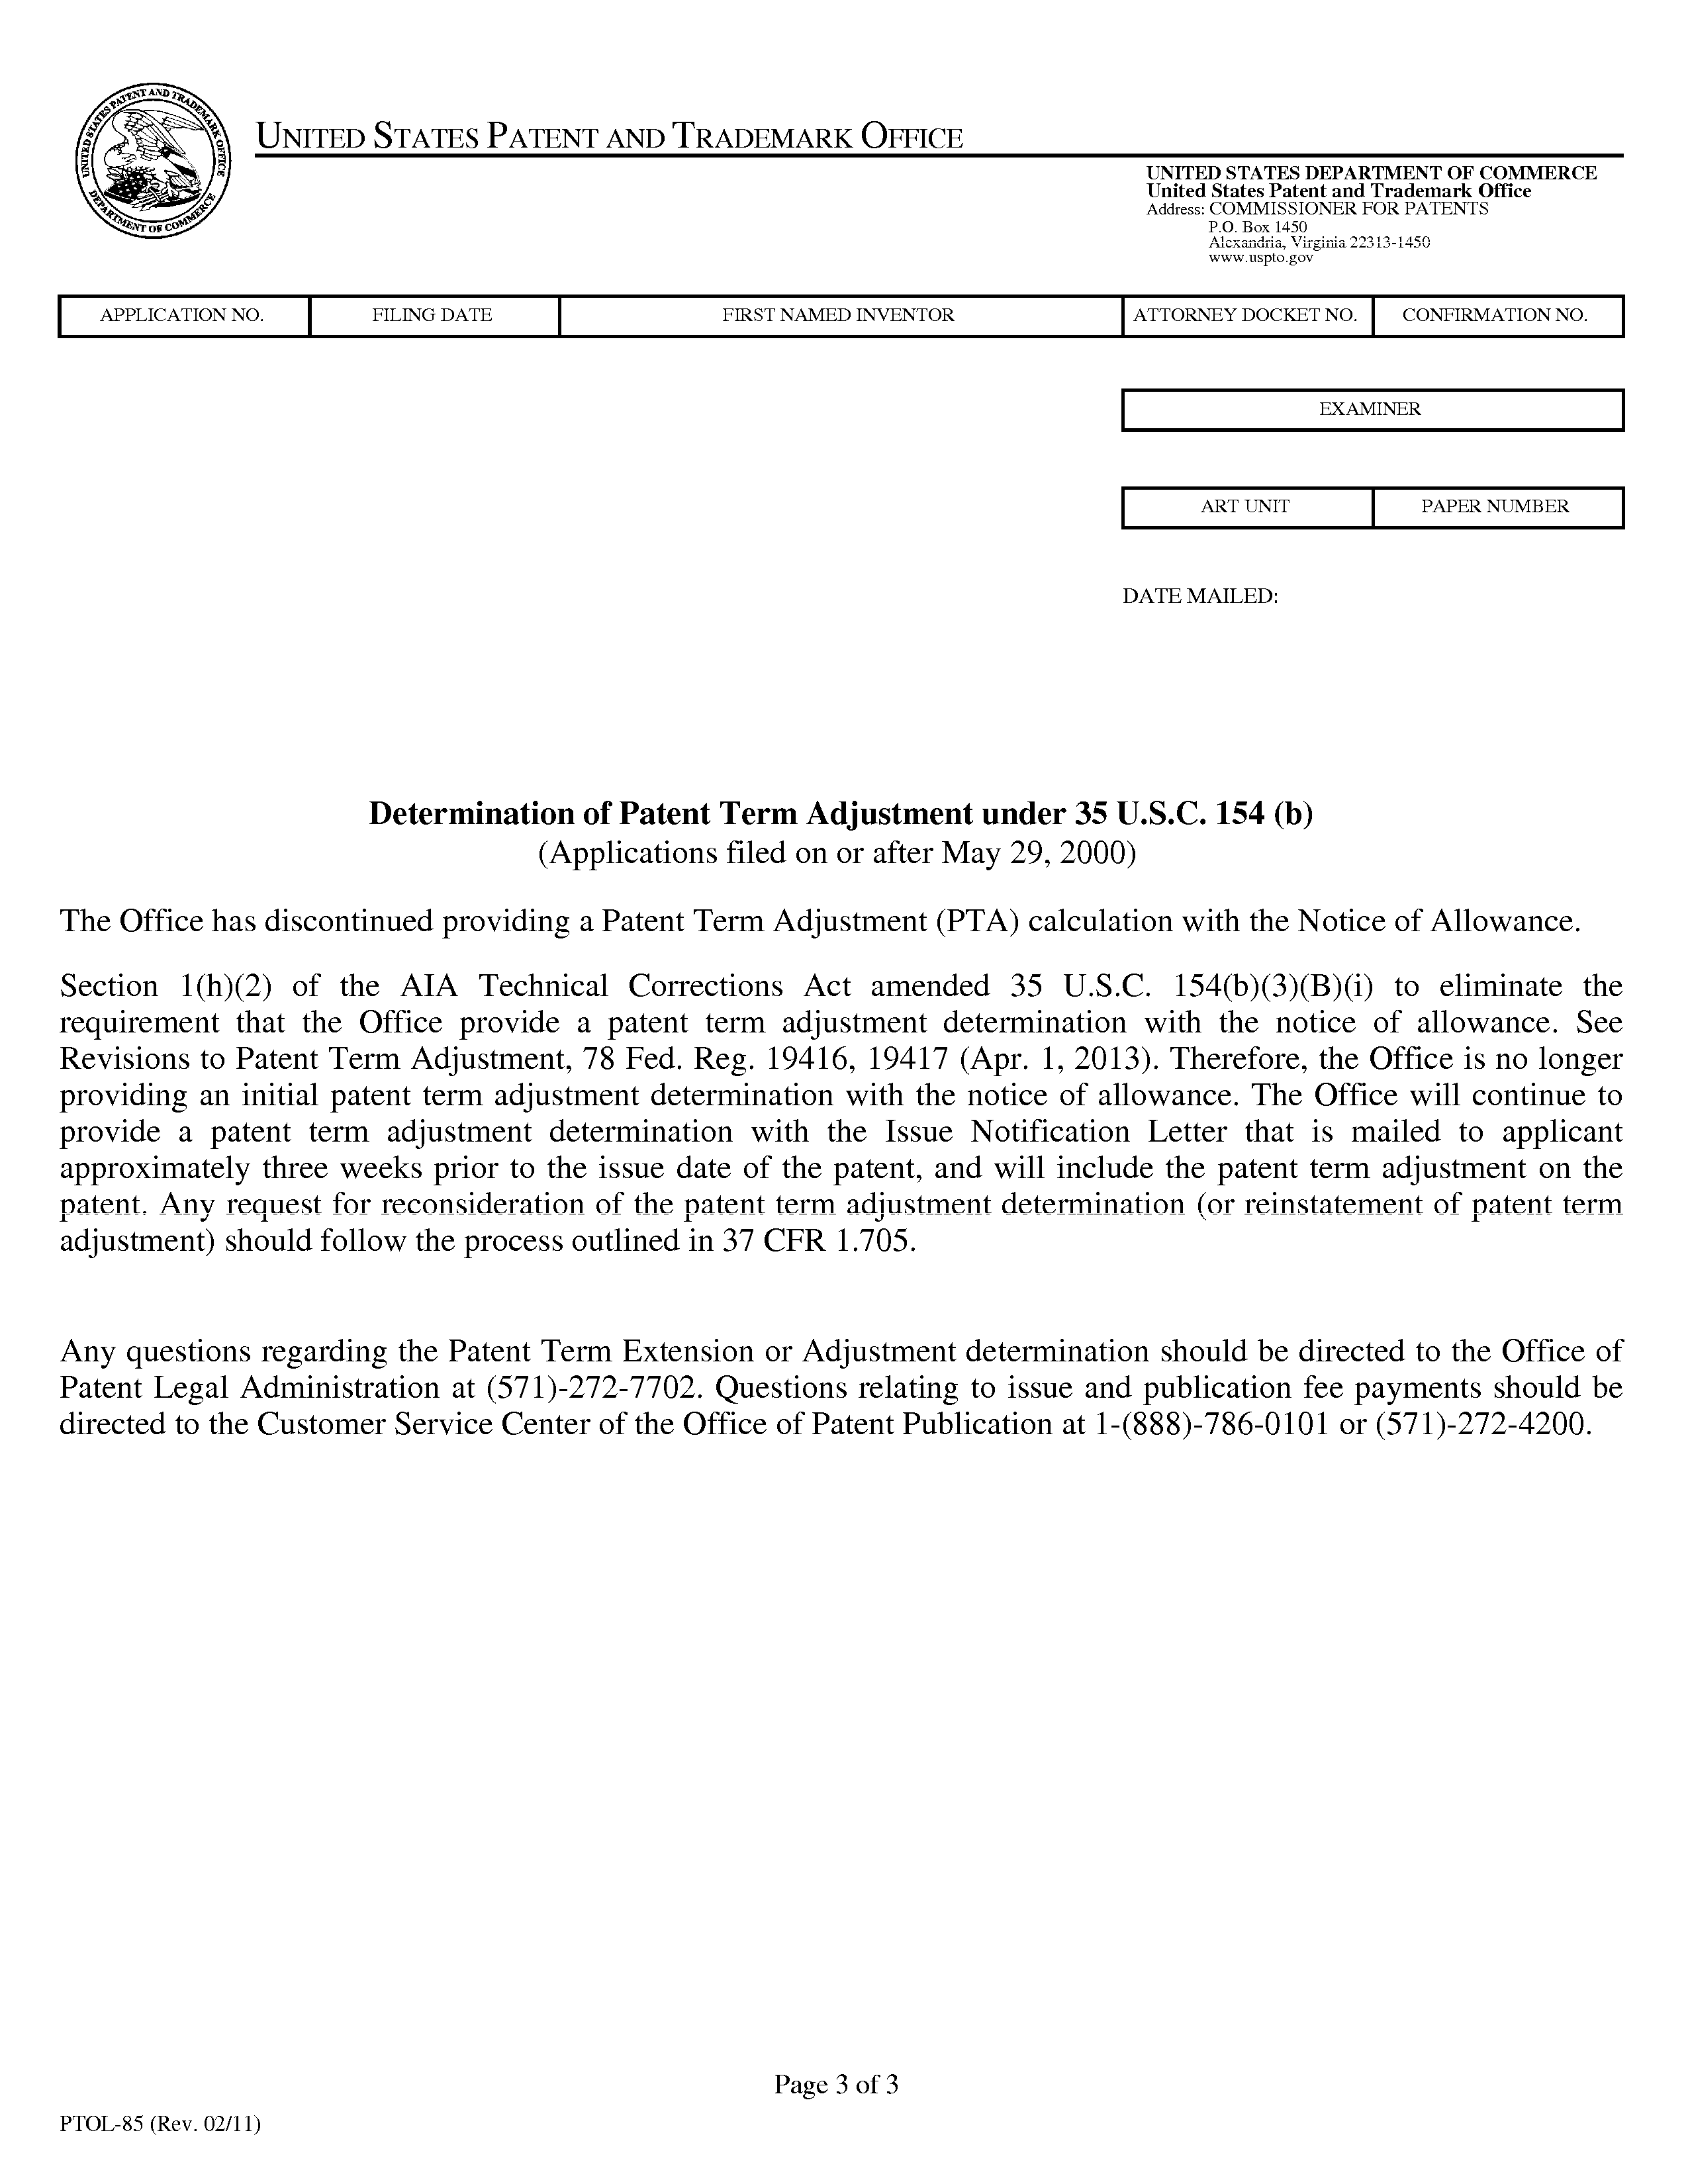 Determination of Patent Term Extension or Adjustment under 35 U.S.C. 154(b) (Form PTOL-85 - page 3)